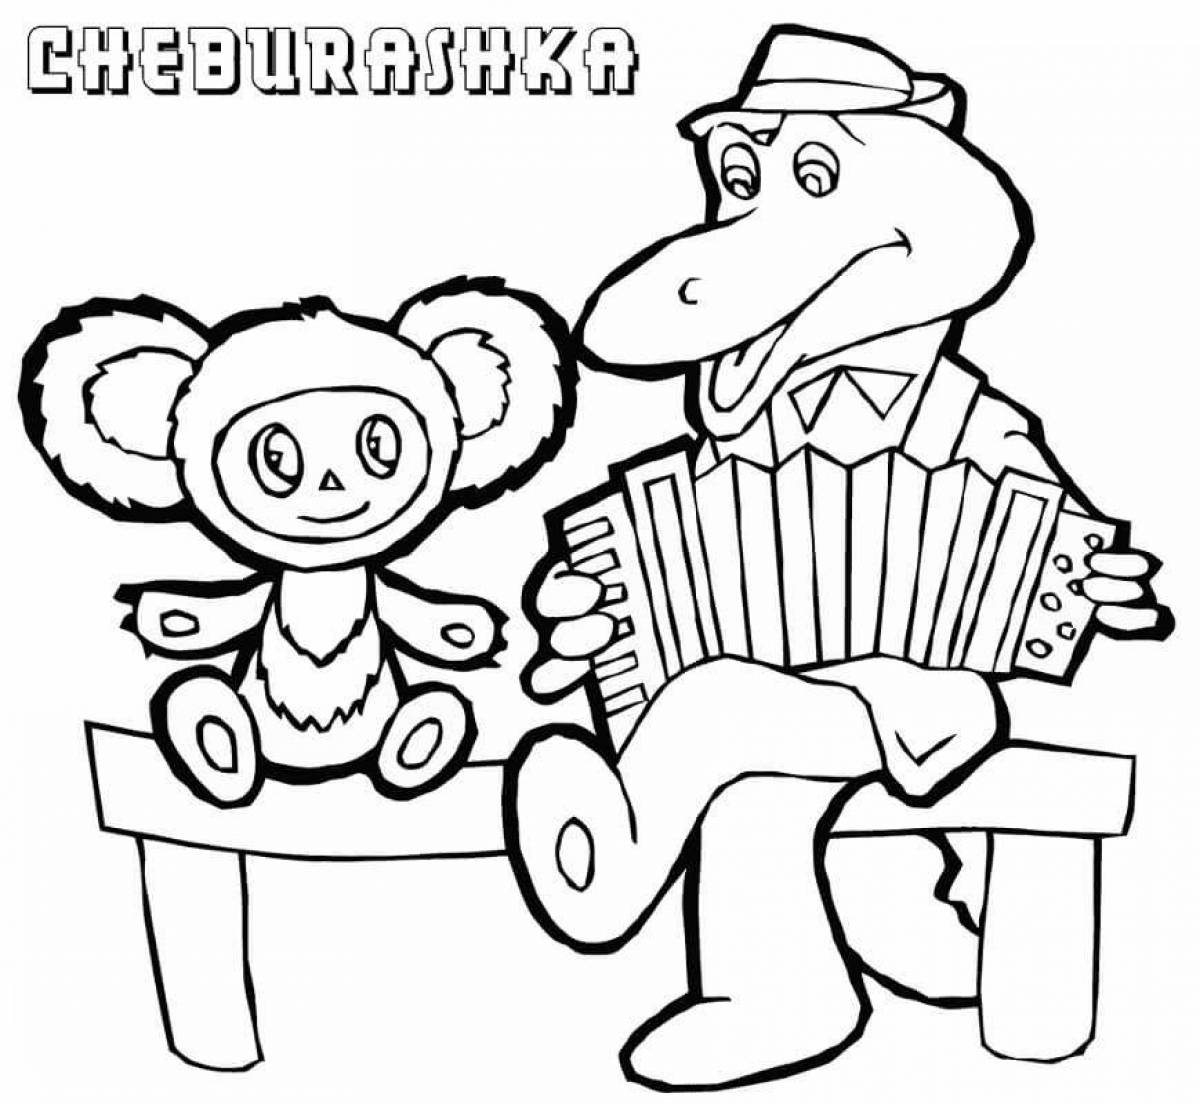 Drawing Cheburashka from the movie